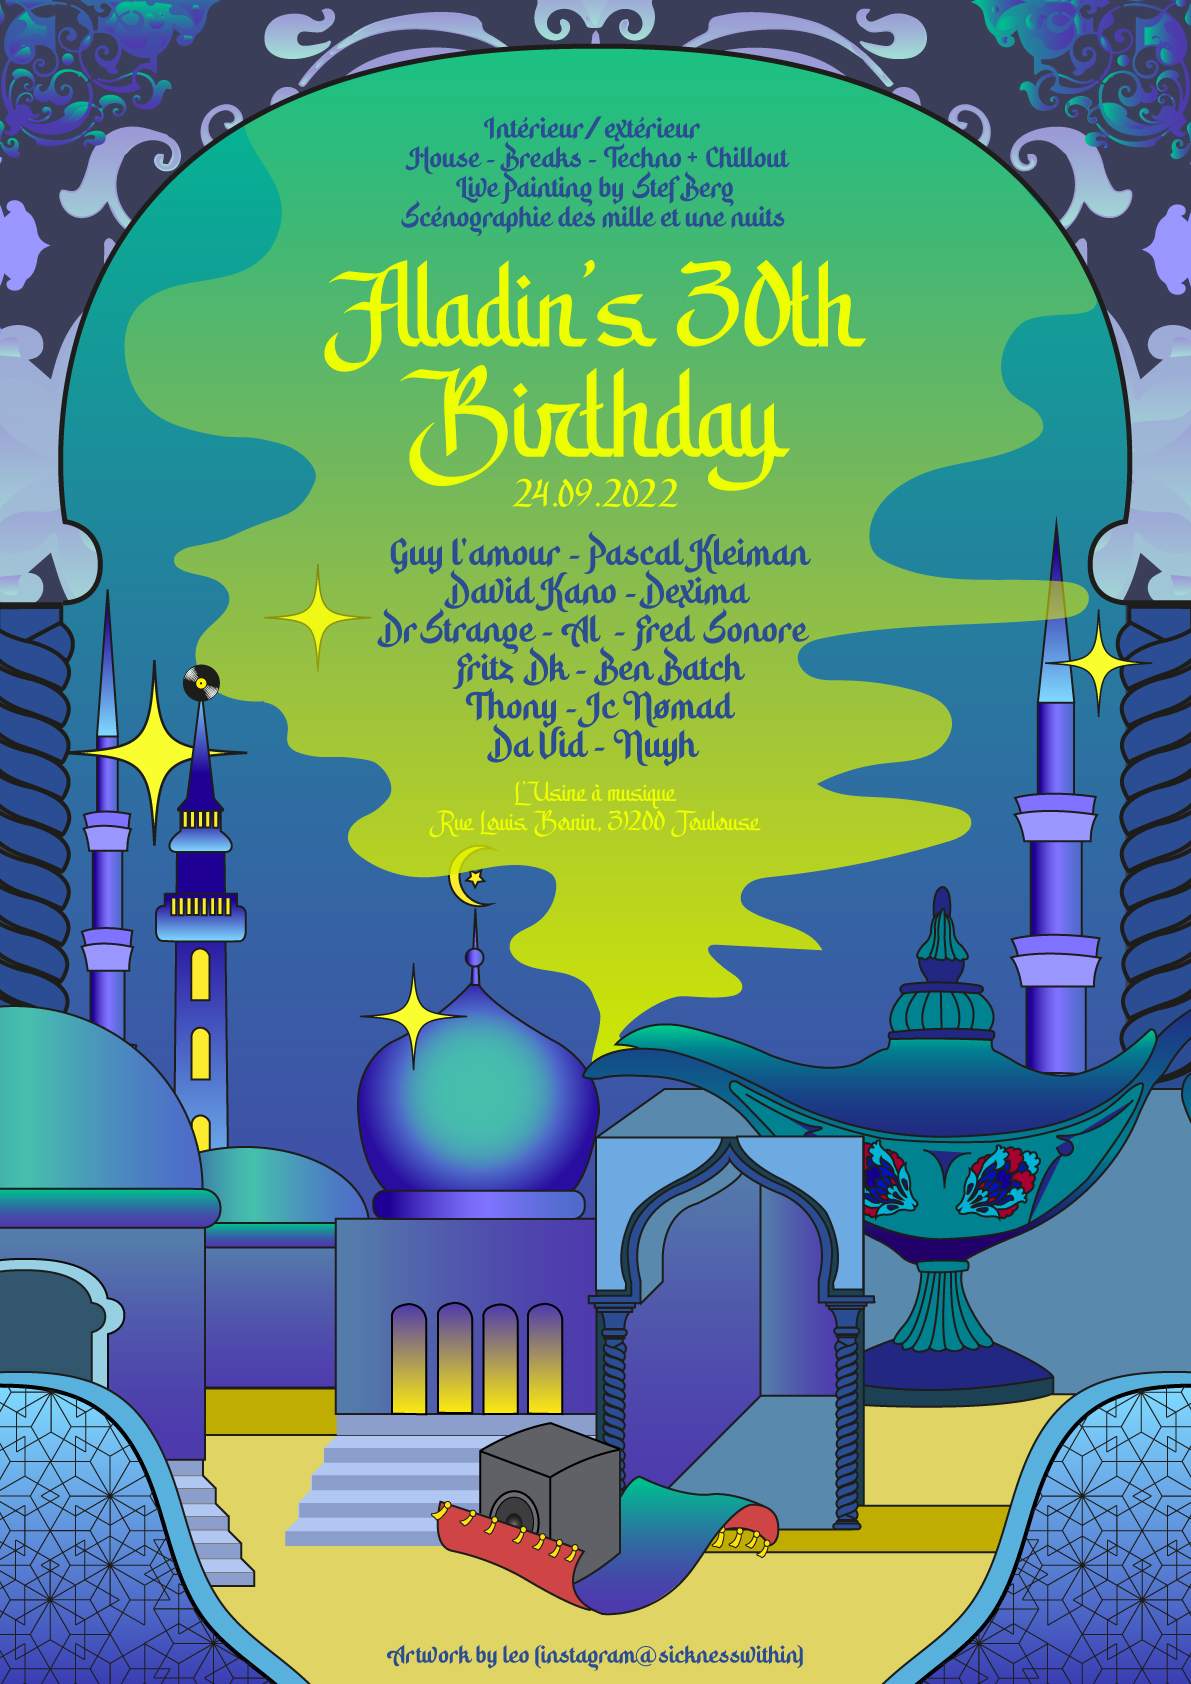 Aladin's 30th Birthday - Página frontal